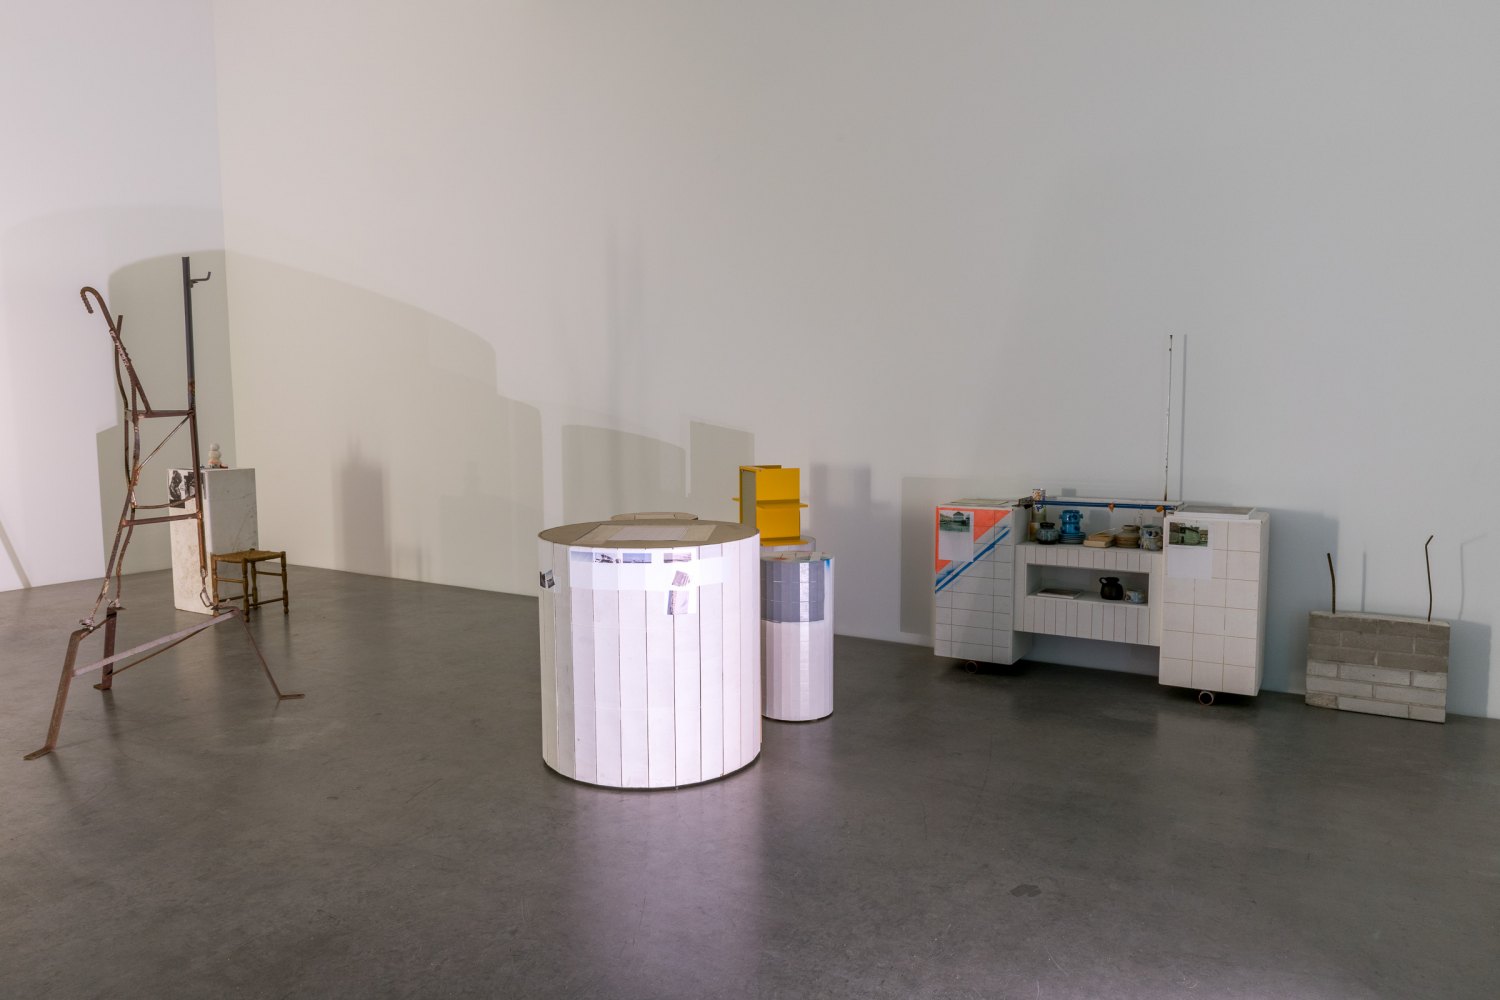 Installation view, Manfred Pernice, >accrochage<, Galerie Neu, Berlin 2021